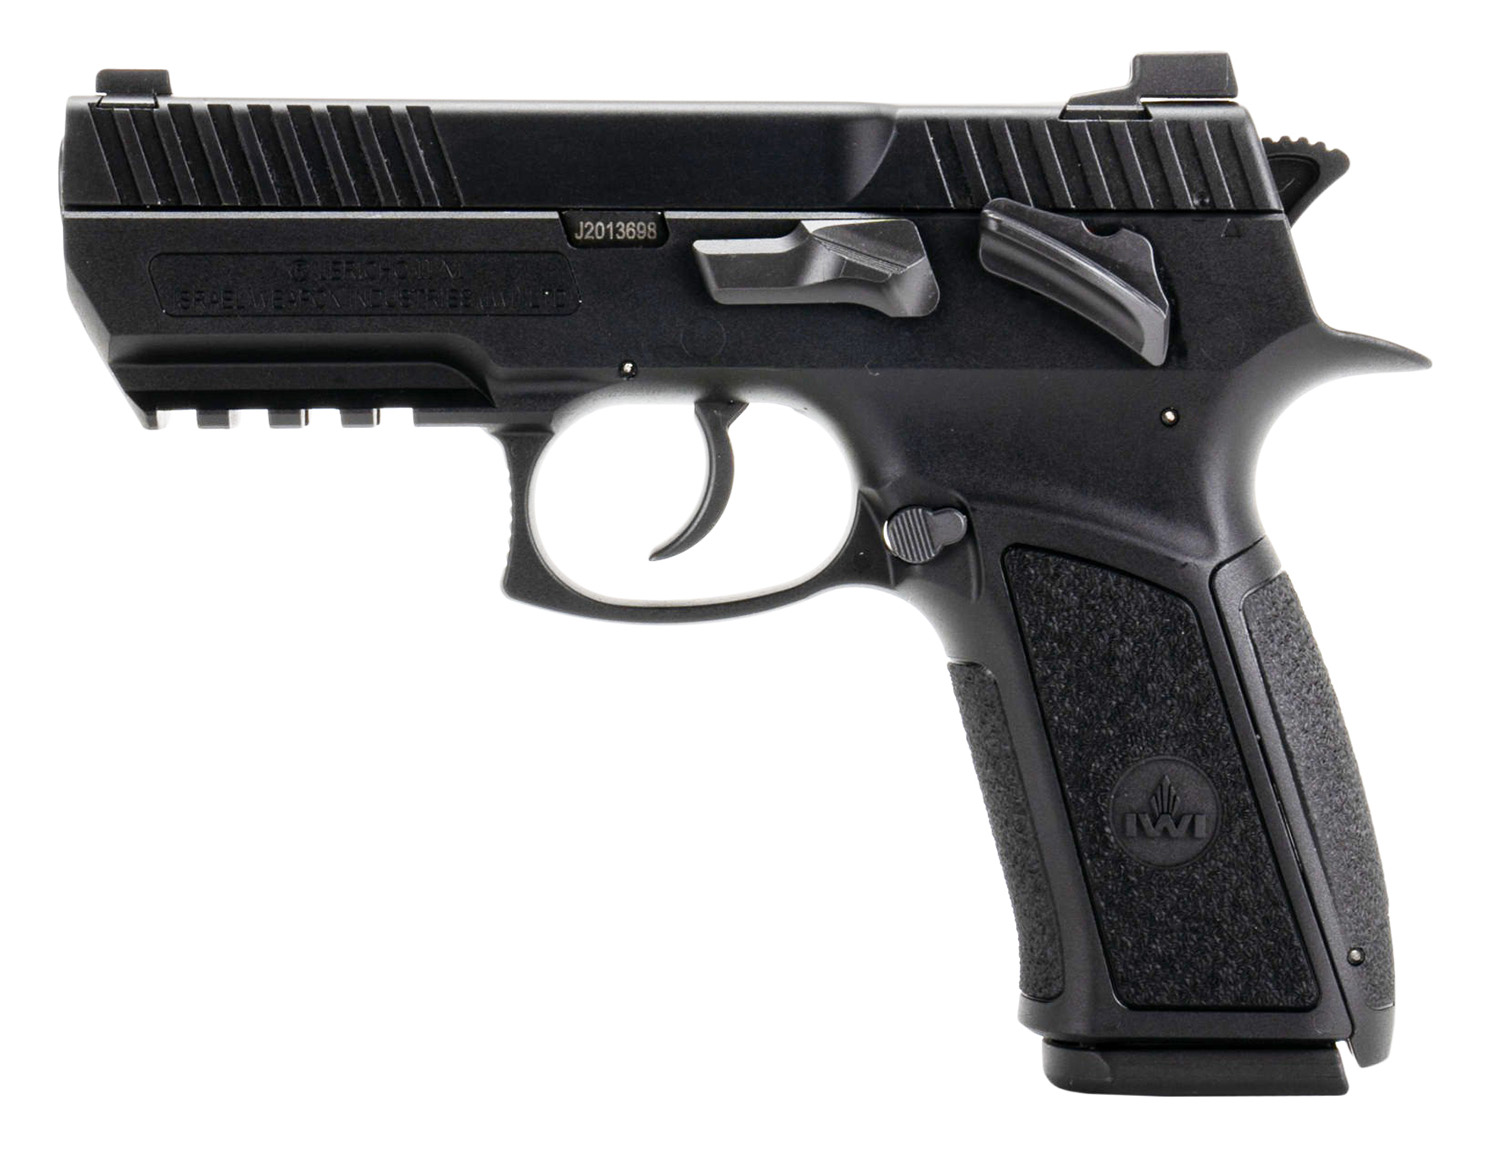 IWI Jericho 941 Enhanced Polymer Side Pistol